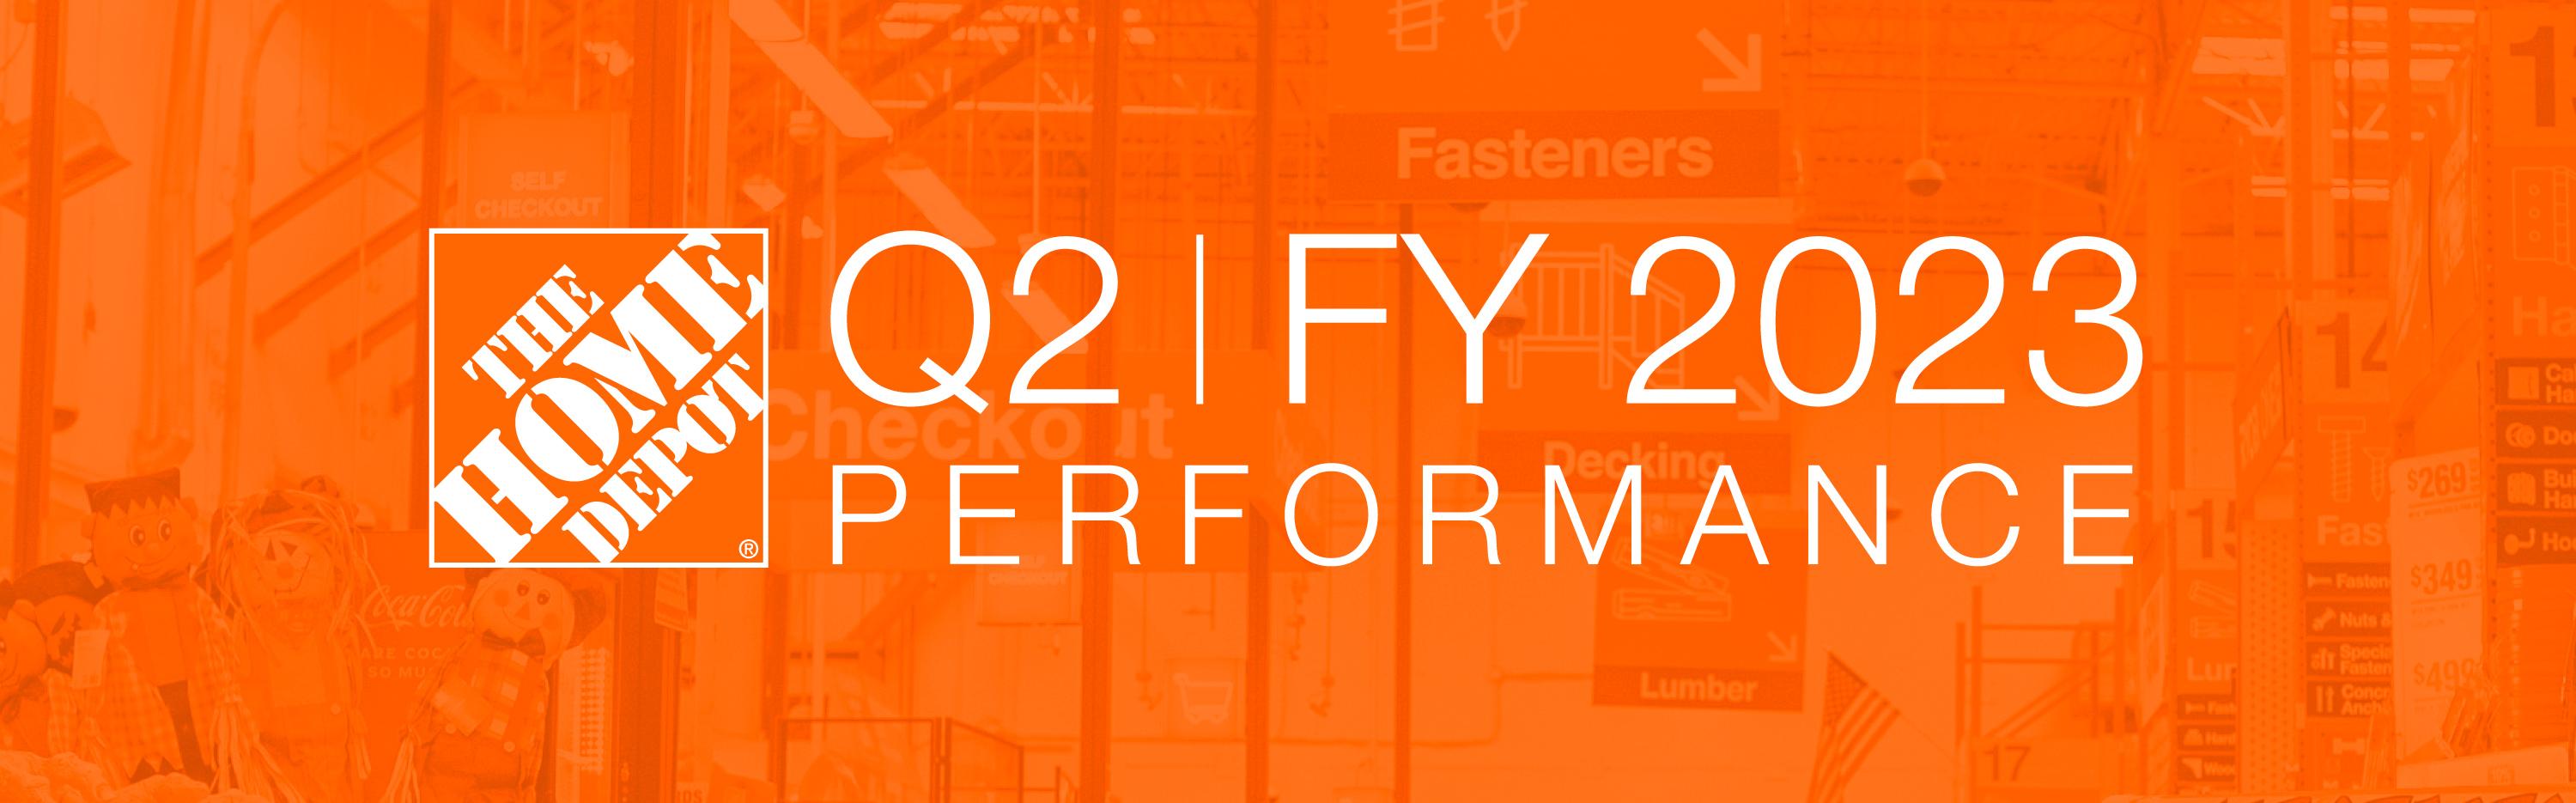 Q2 FY 2023 Performance